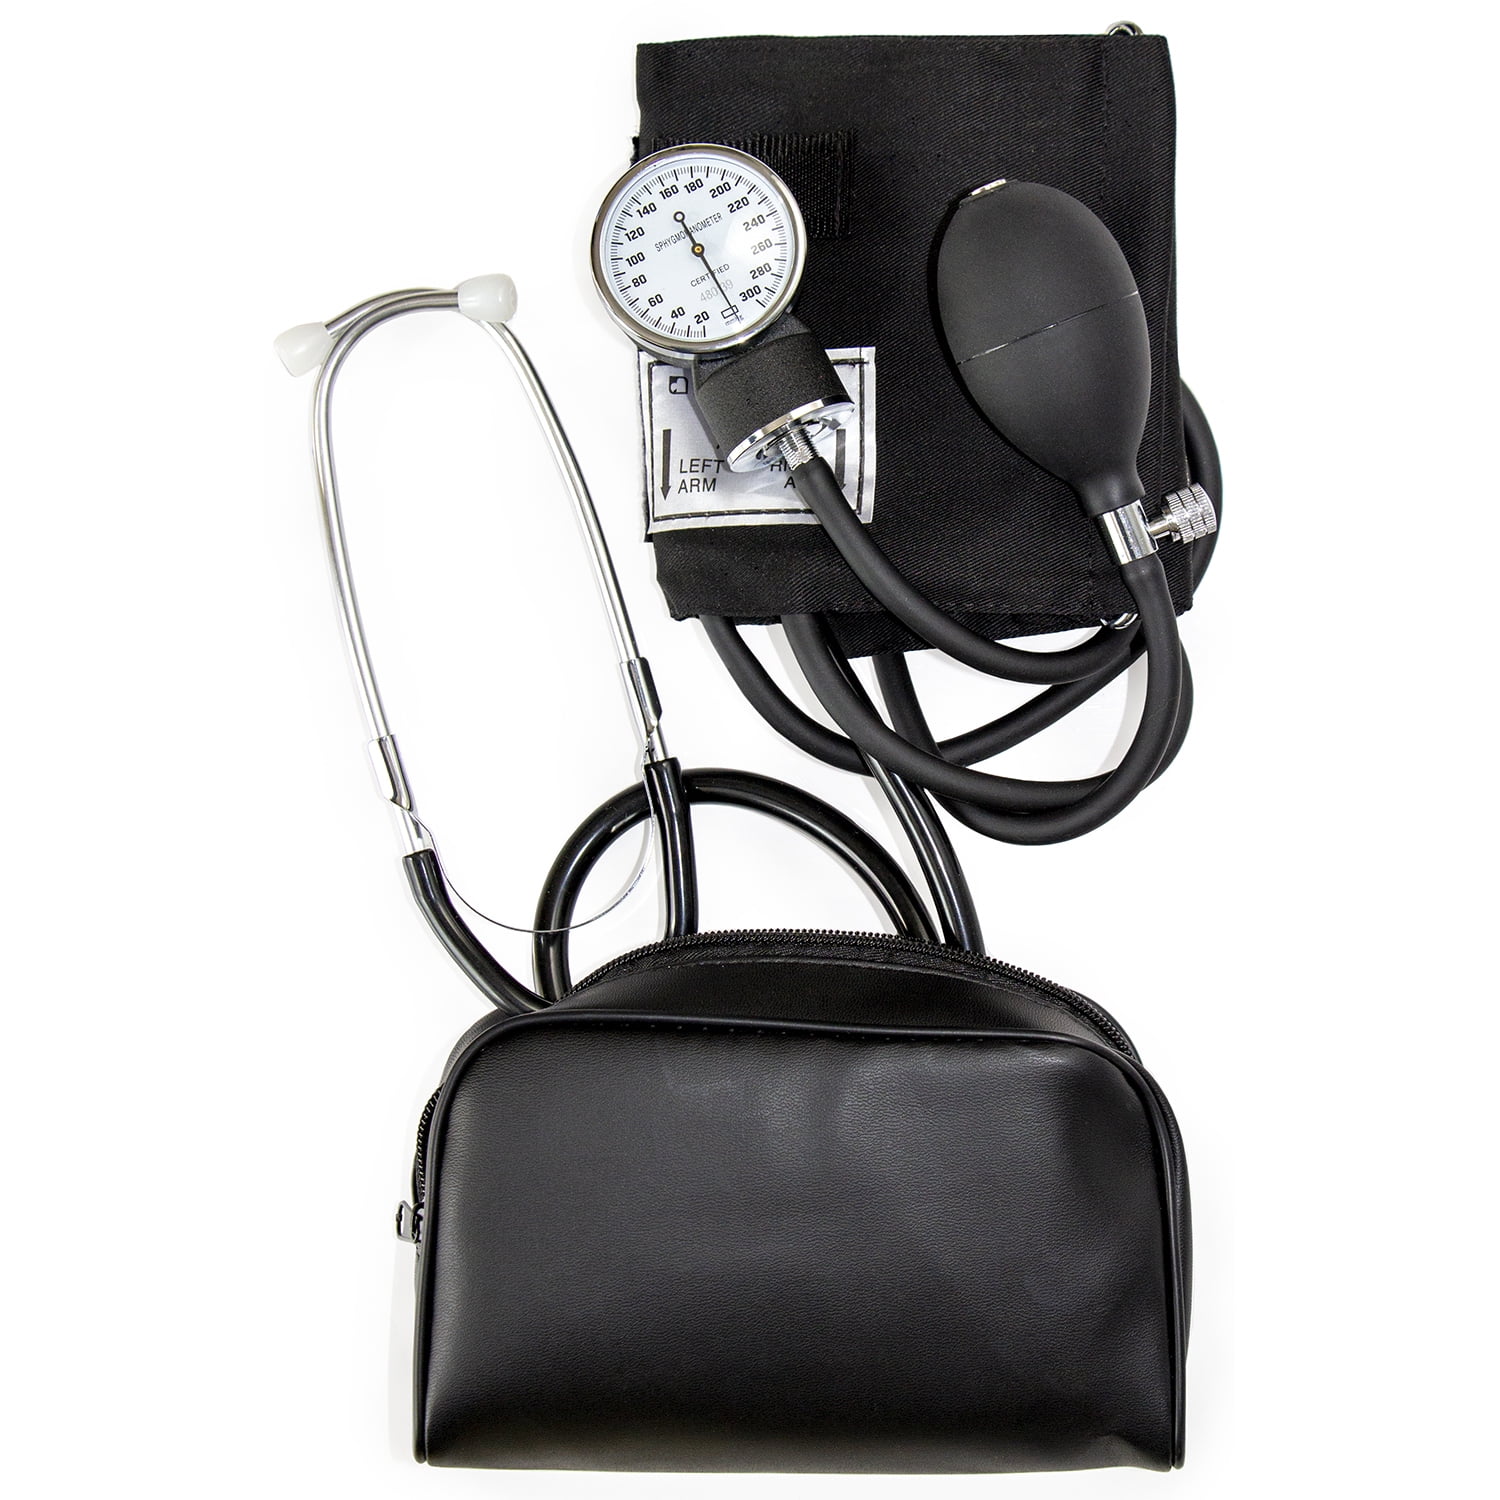 Healthmate® Premium Digital Blood Pressure Monitor - In His Hands Birth  Supply